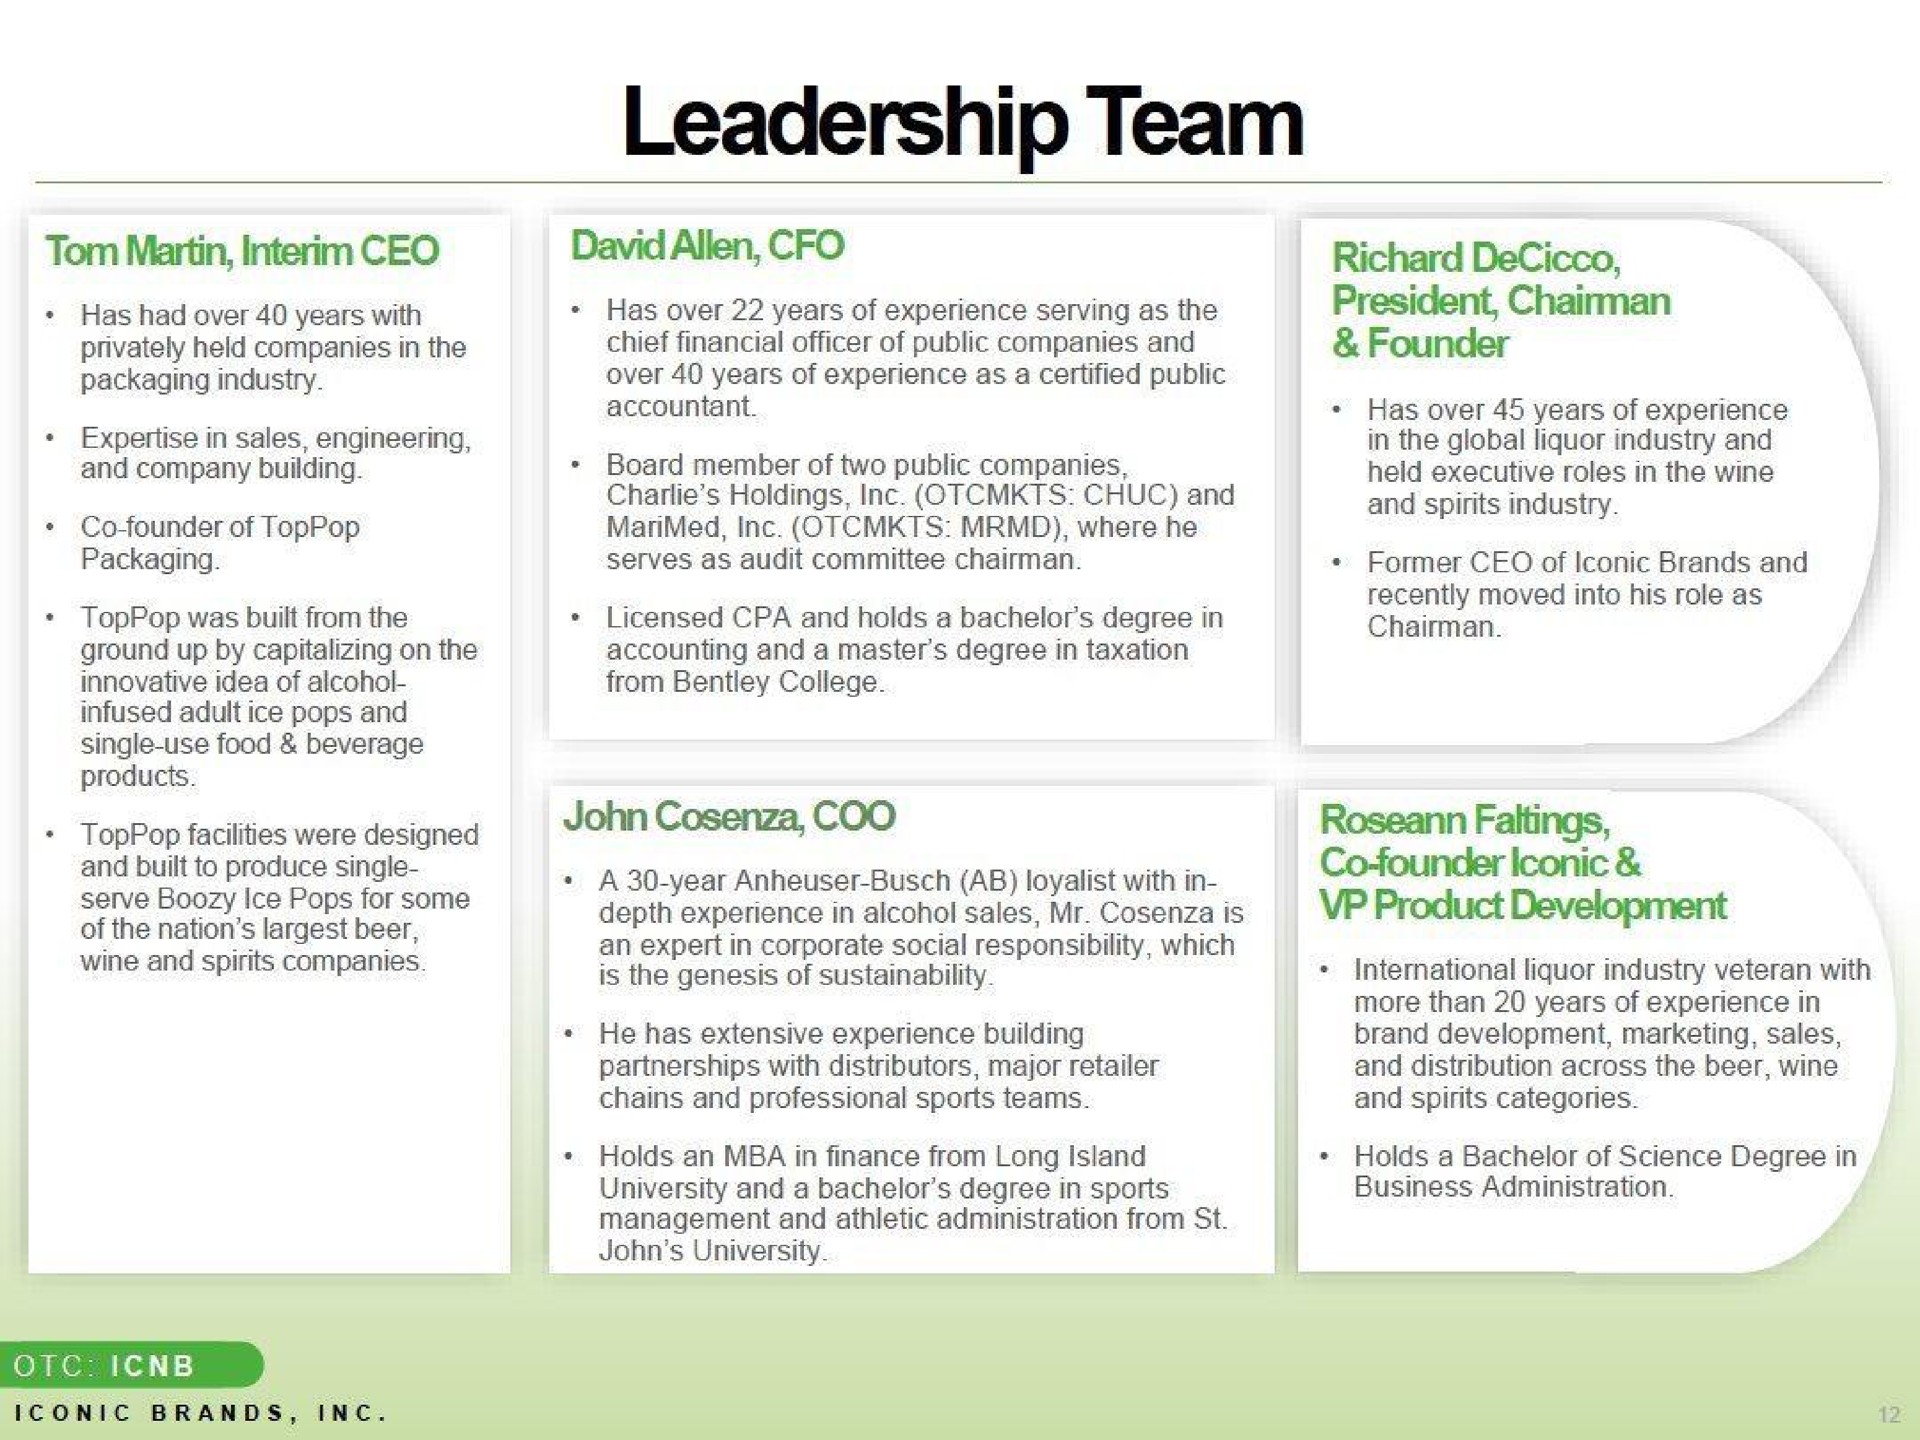 leadership team | Iconic Brands